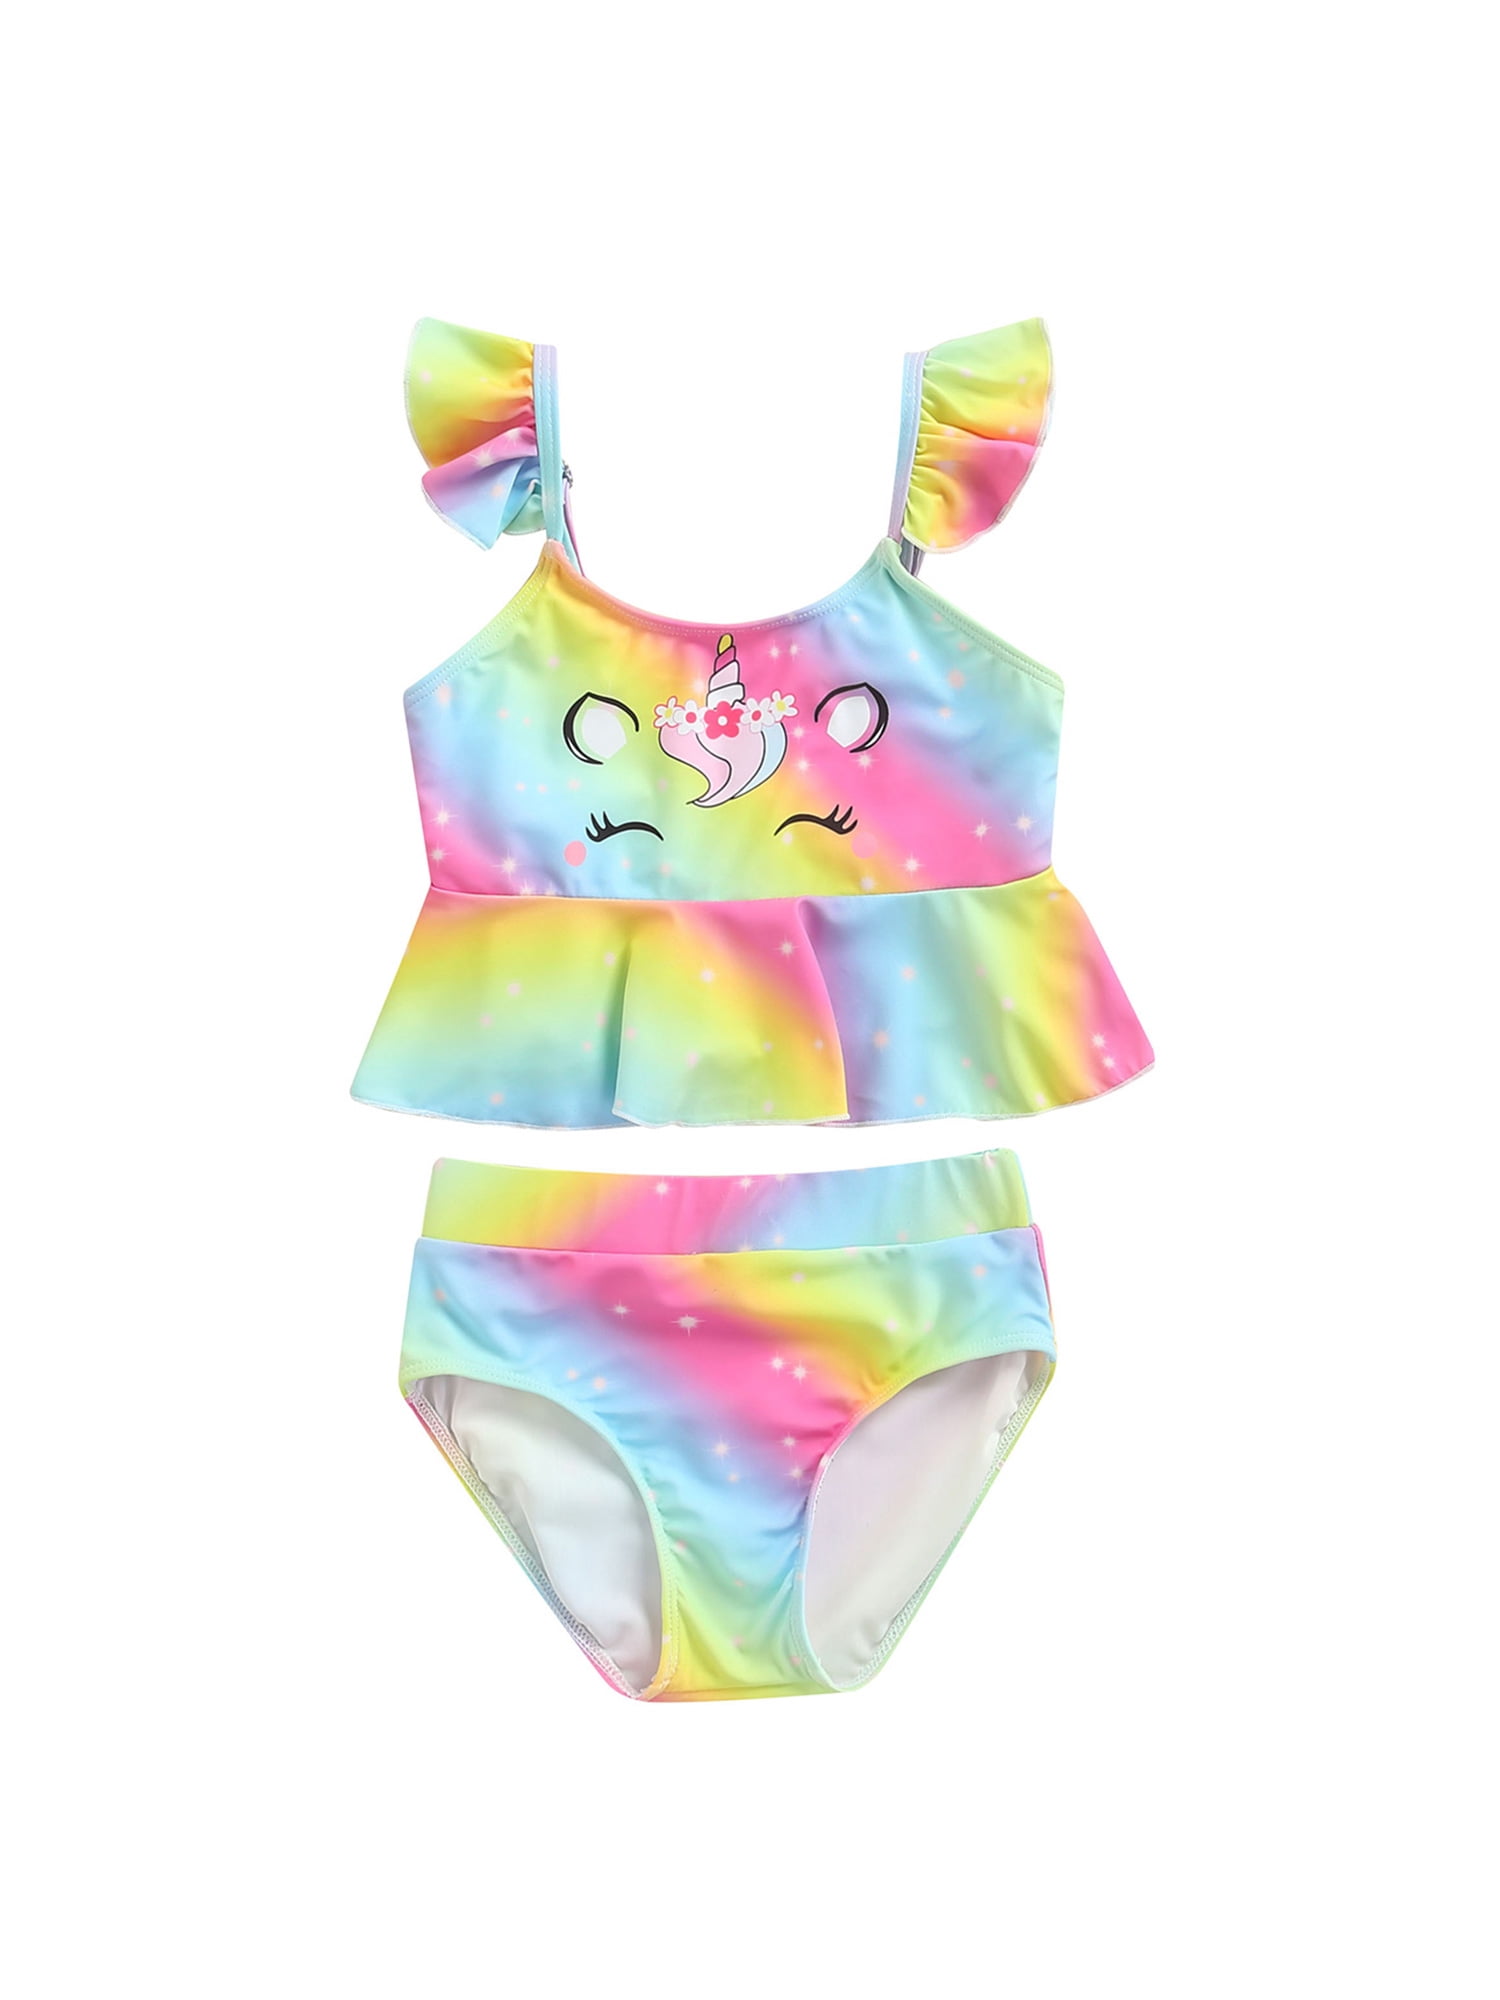 Noubeau Infant Swimsuit Girl One Piece Swimsuits Ruffle Bikini Baby Bathing Suit Girl Swimwear Cartoon Tankini 